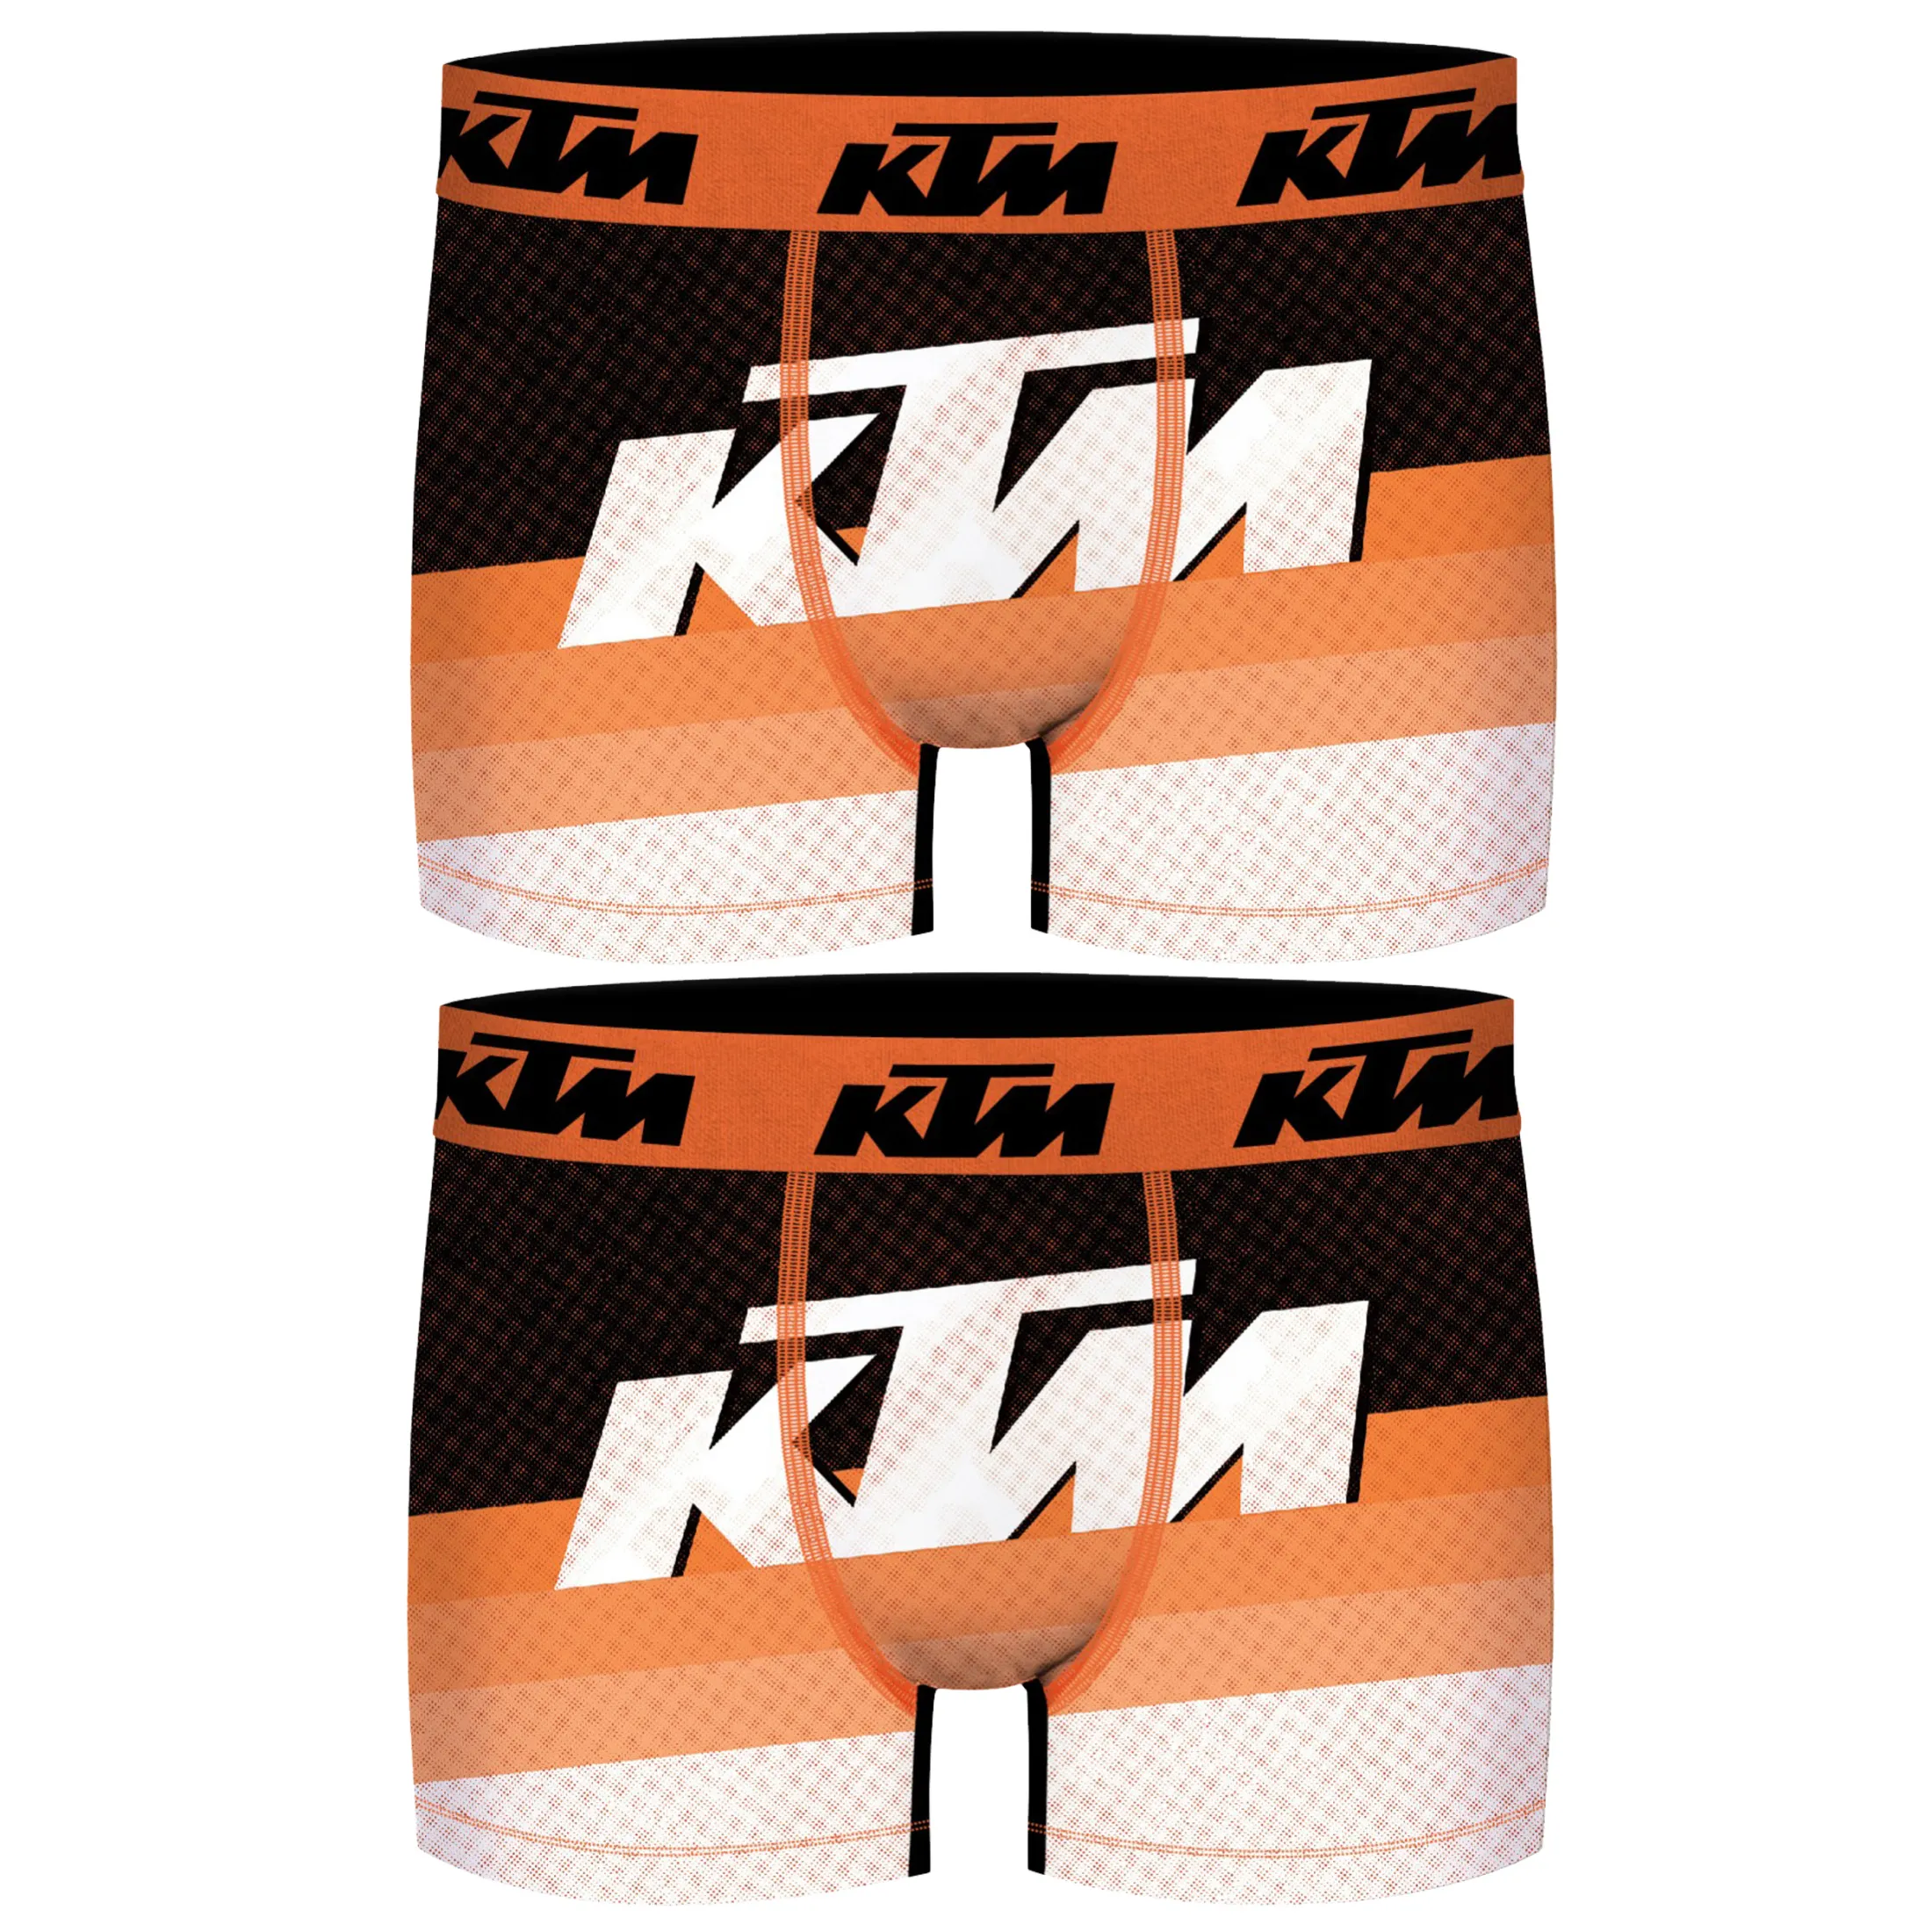 Pack calzoncillos KTM Motorland para hombre